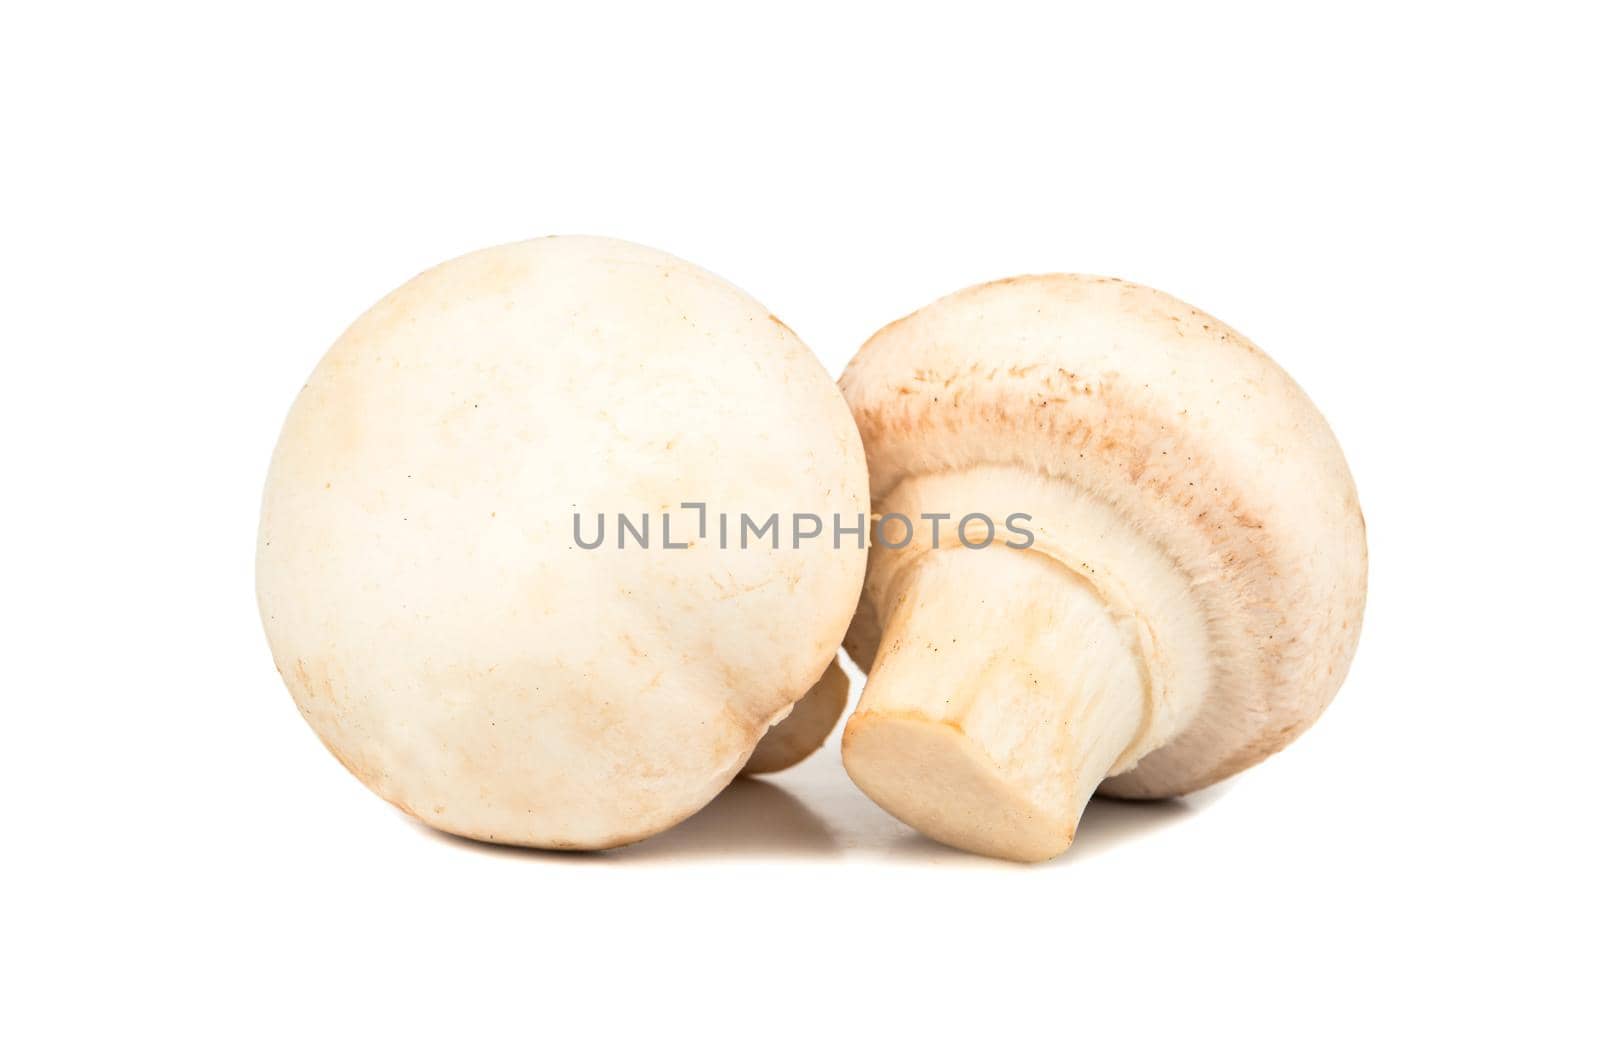 Two fresh champignon mushroom on a white background